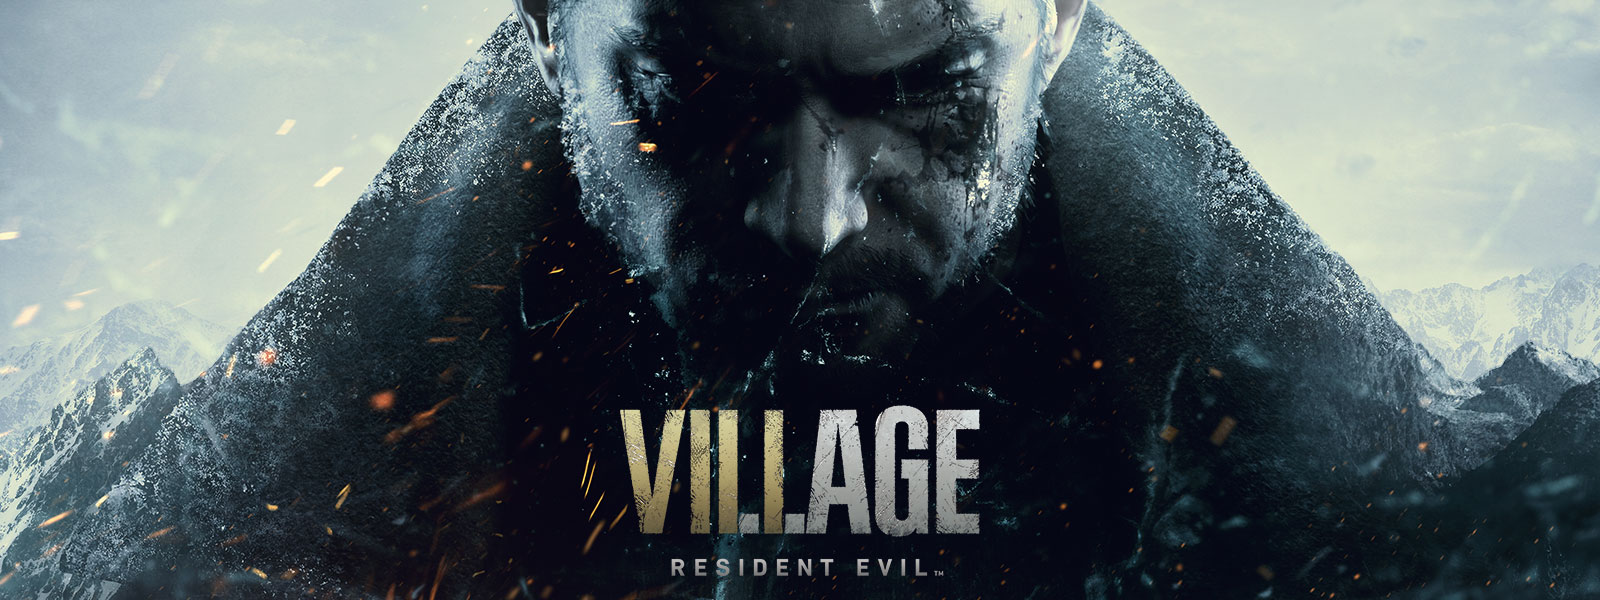 Resident Evil Village: Chris Redfields allvarliga ansikte på sidan av ett berg